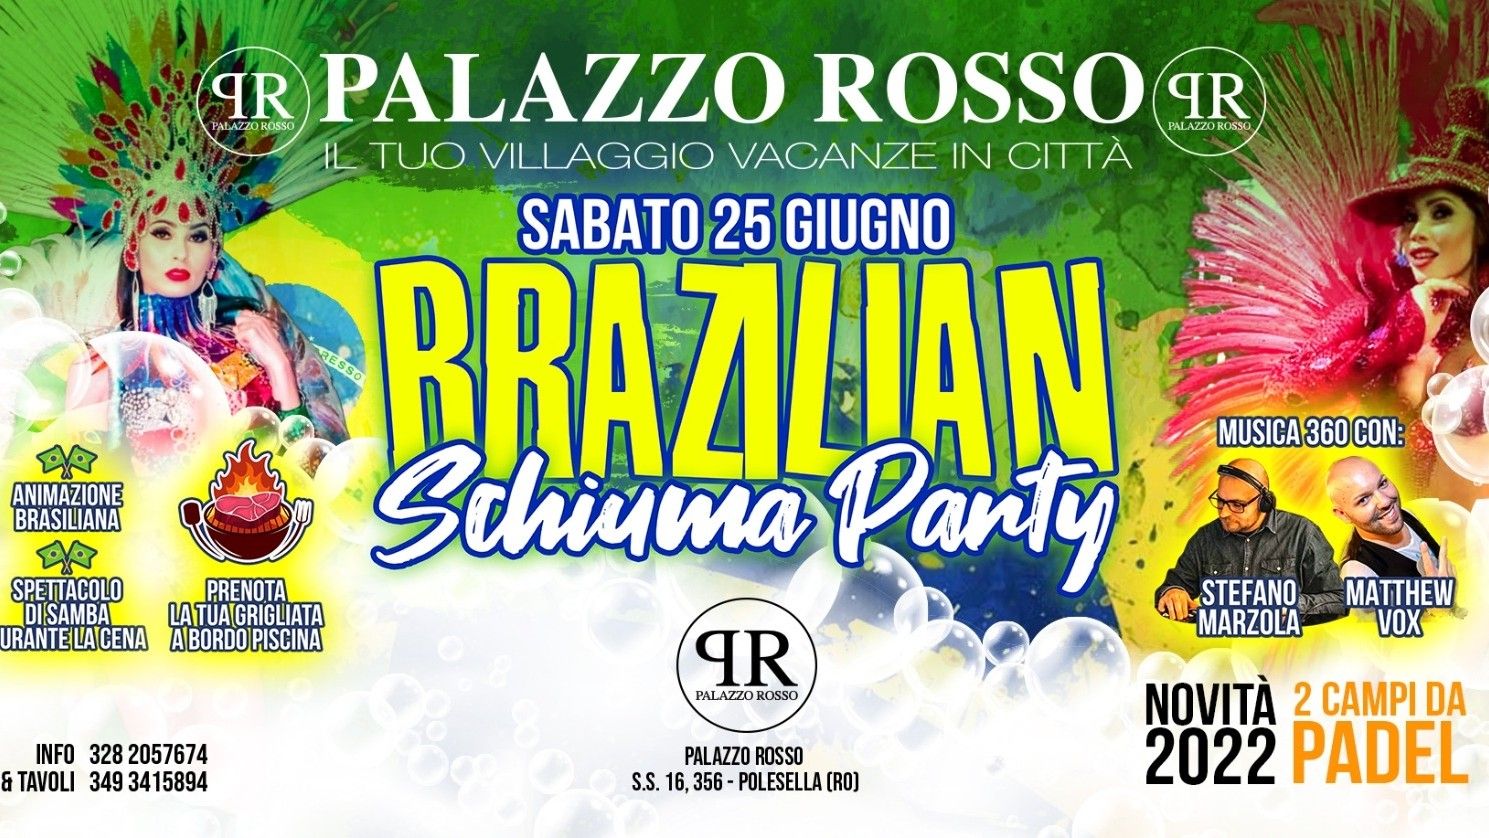 Brazilian Schiuma Party